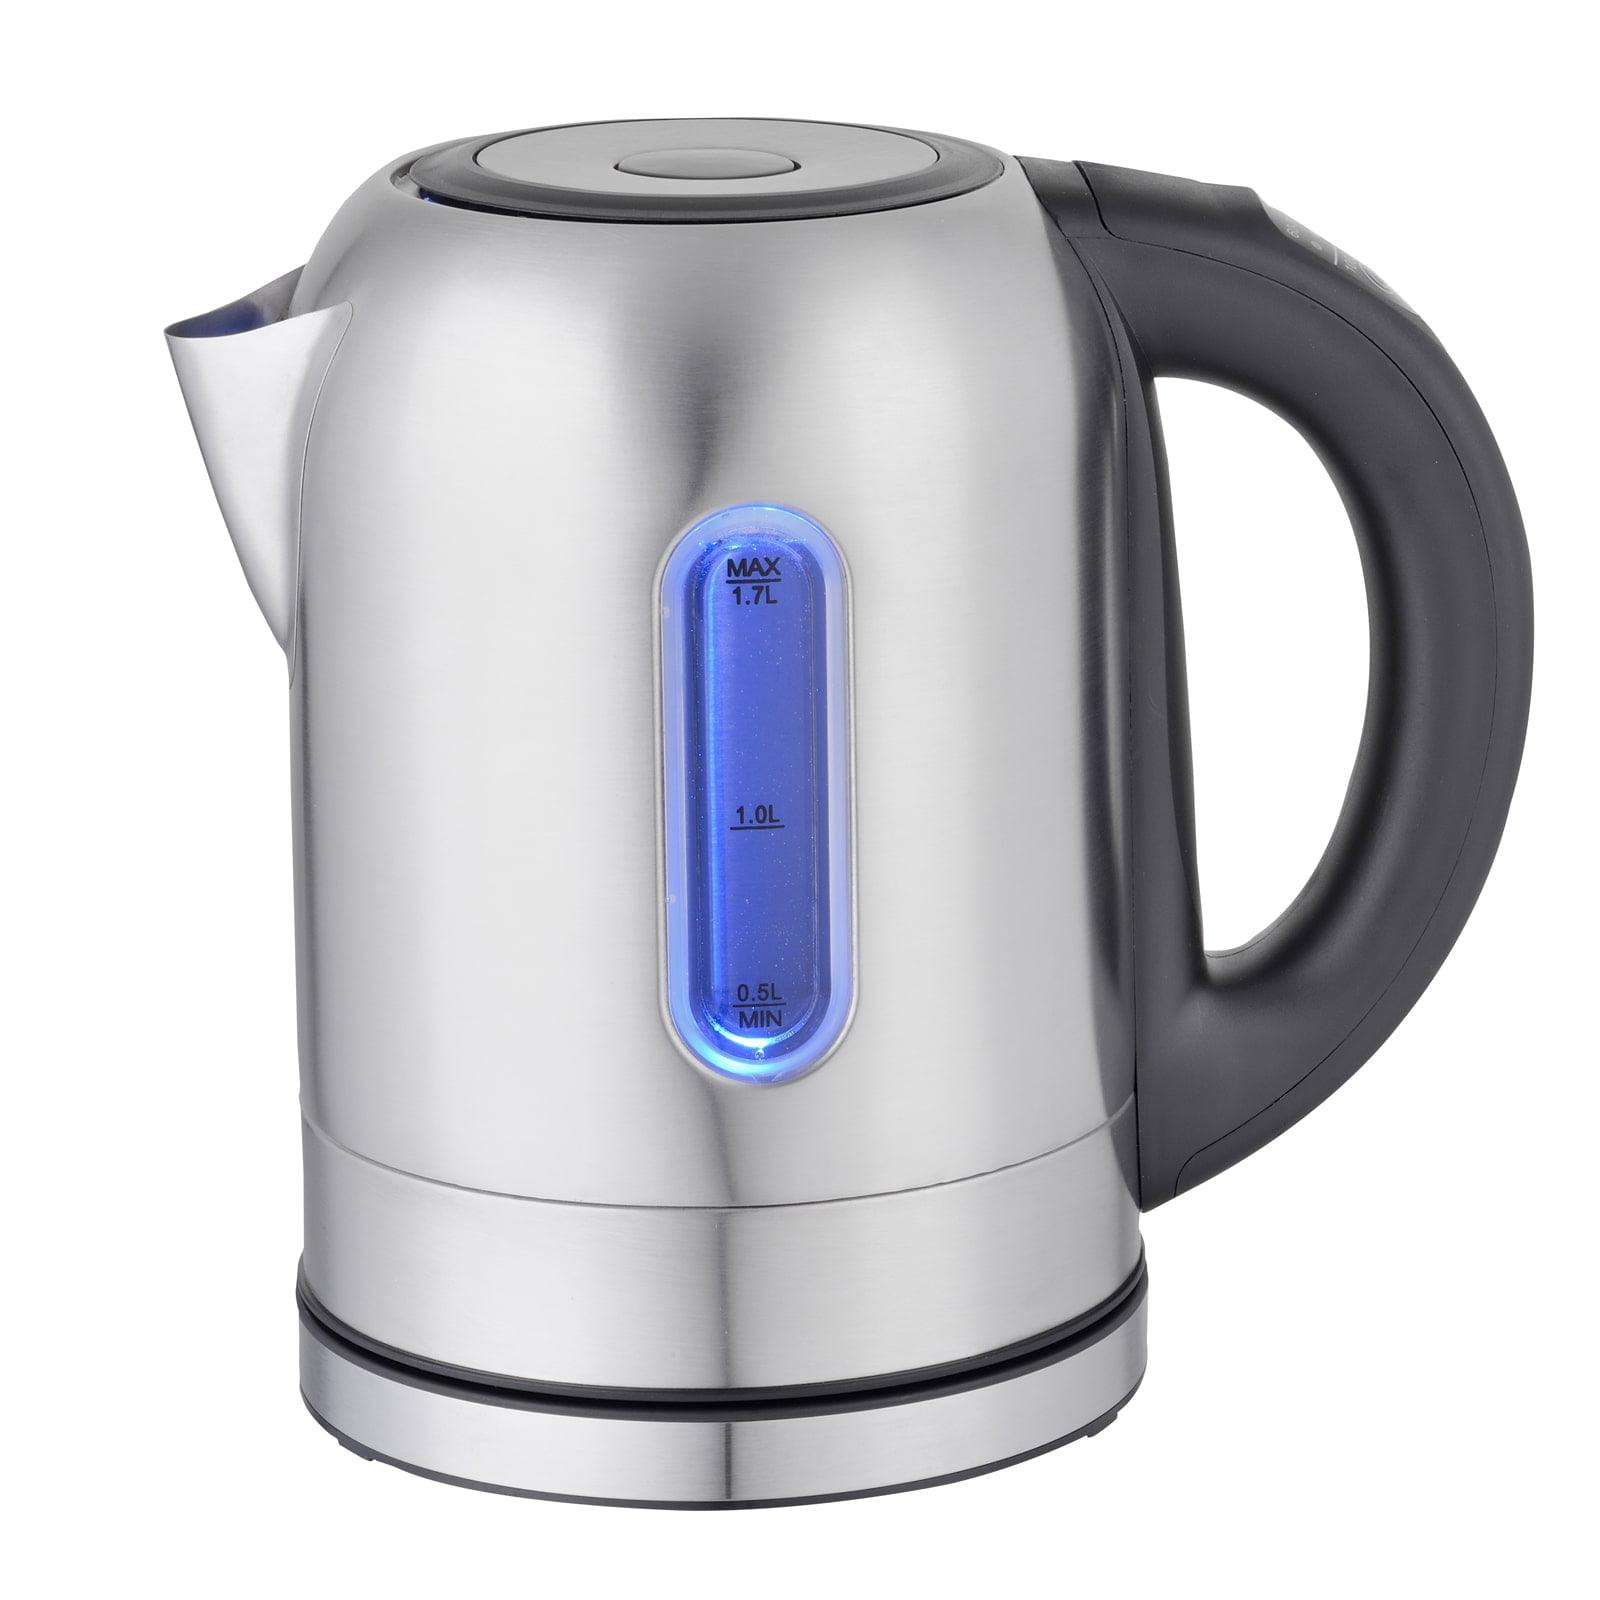 Prepology 1.7-Liter Electric Tea Kettle